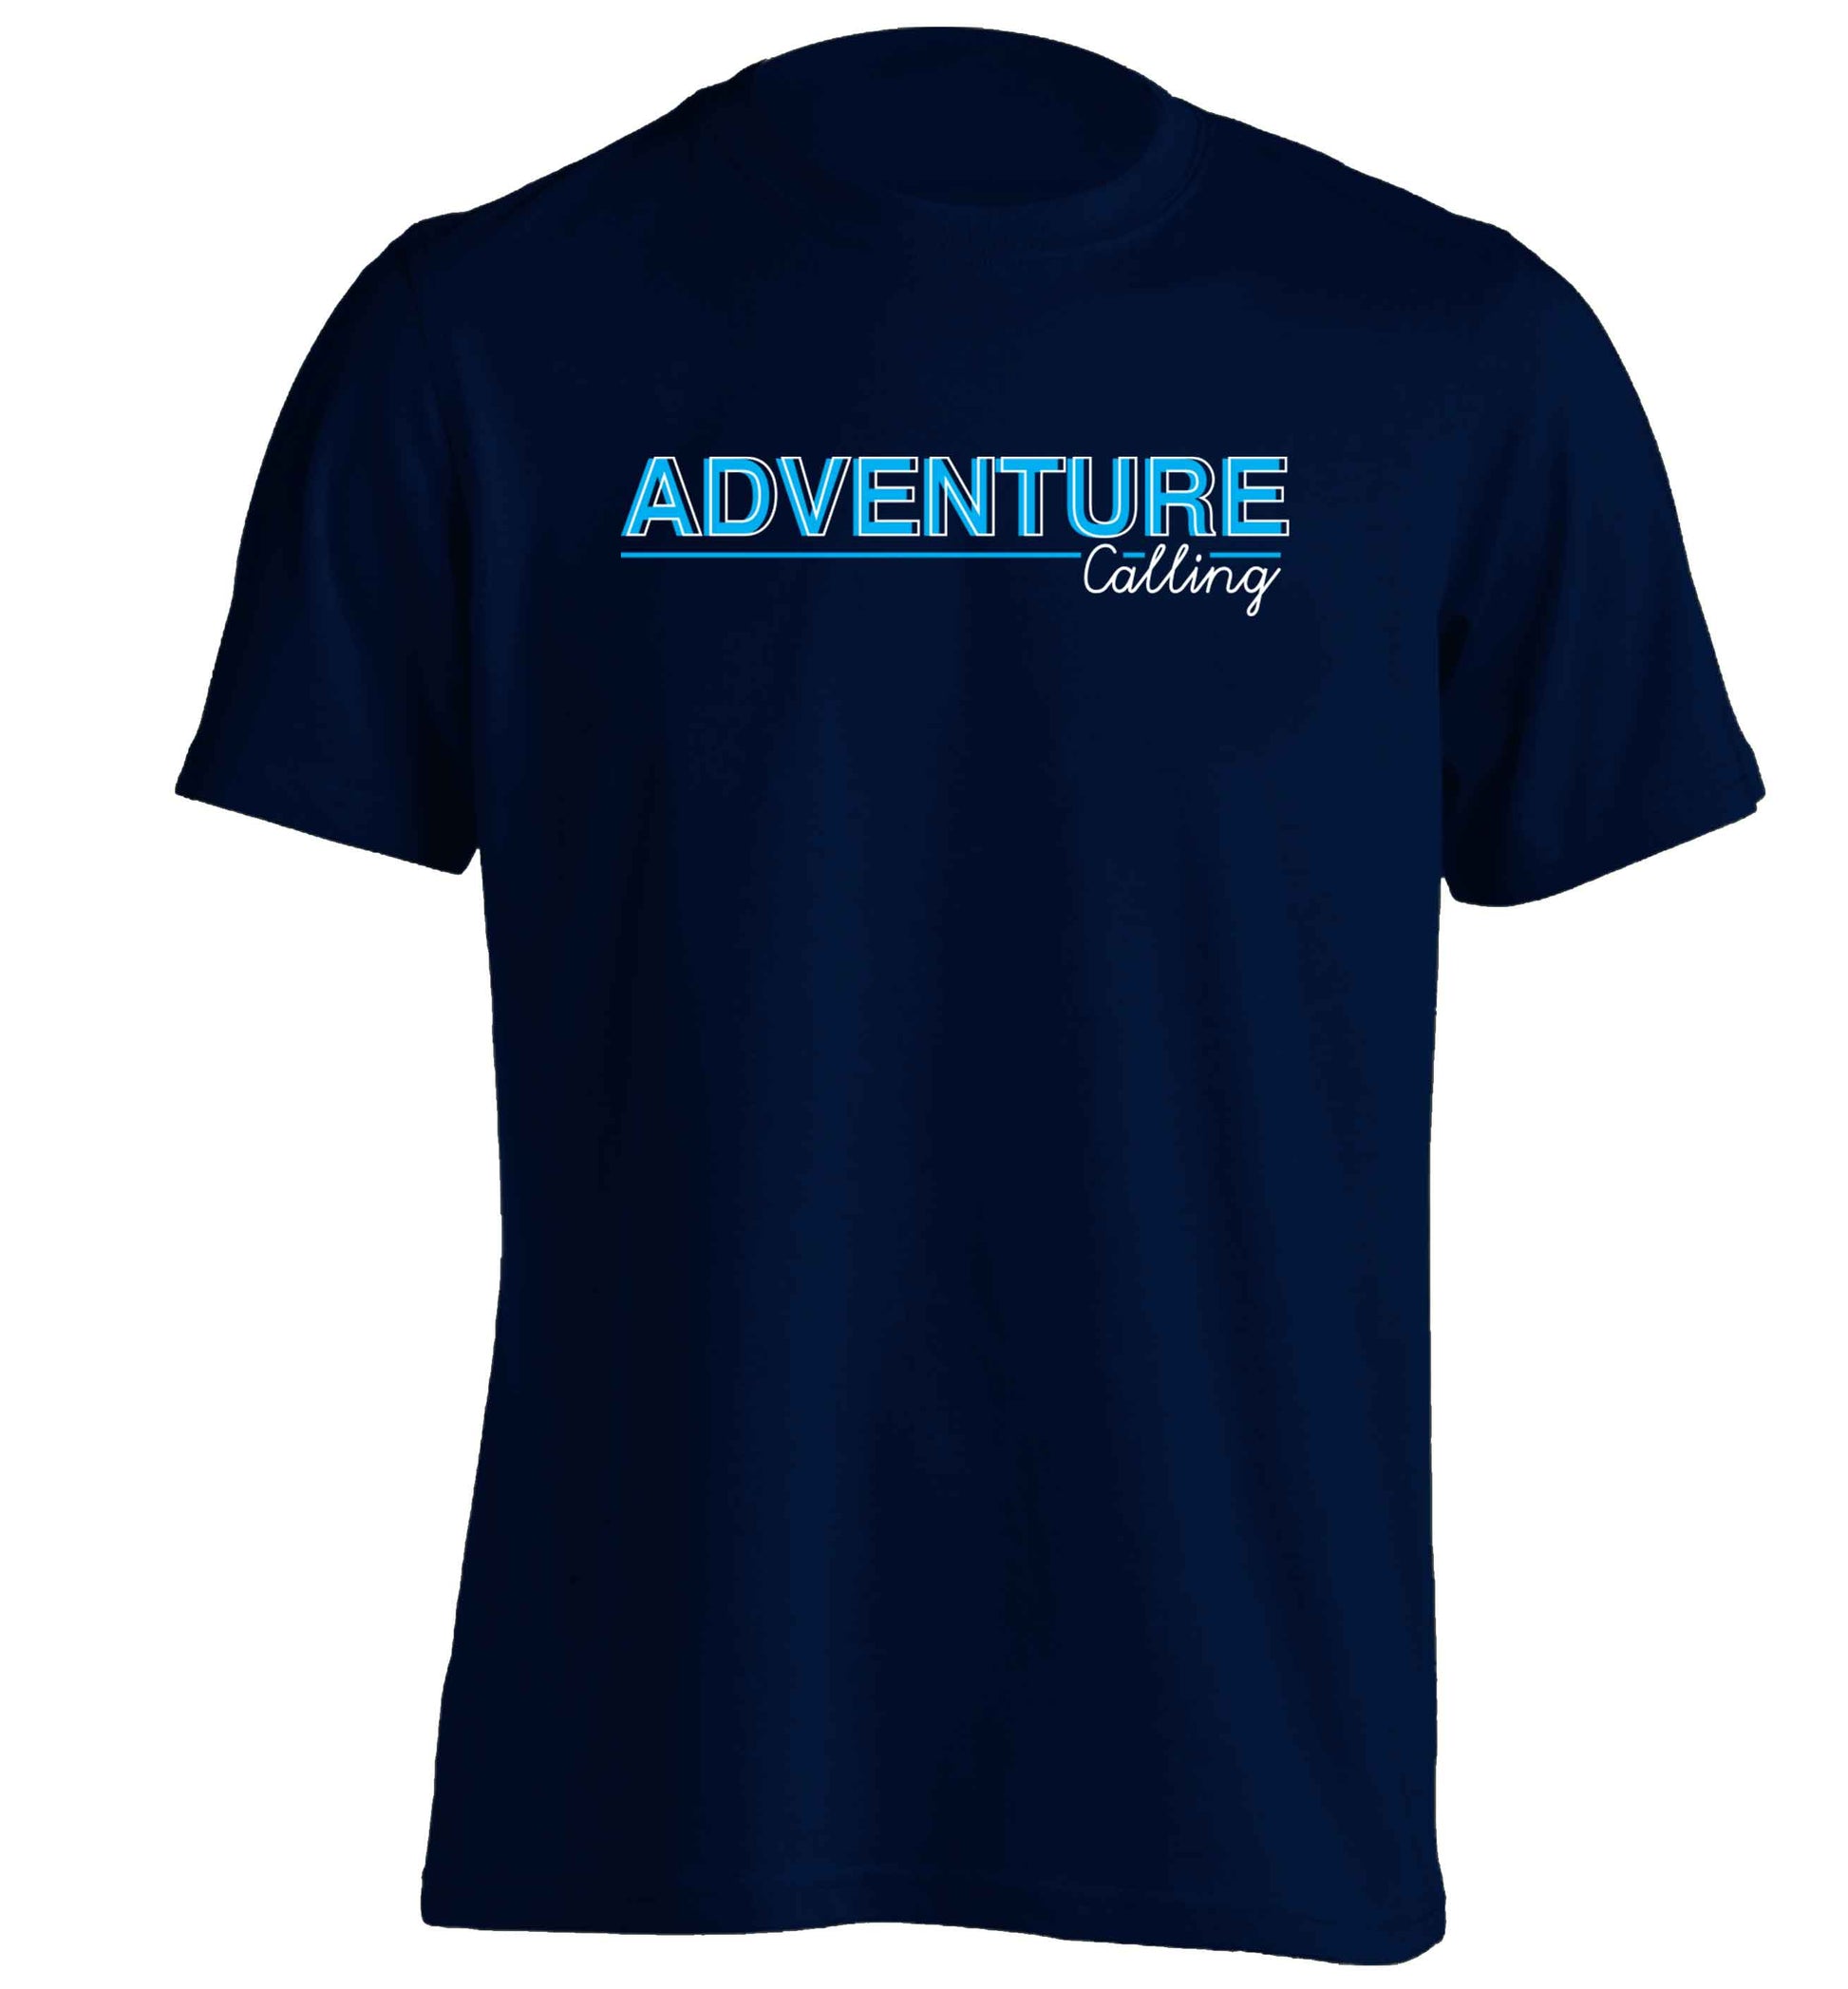 Adventure calling adults unisex navy Tshirt 2XL